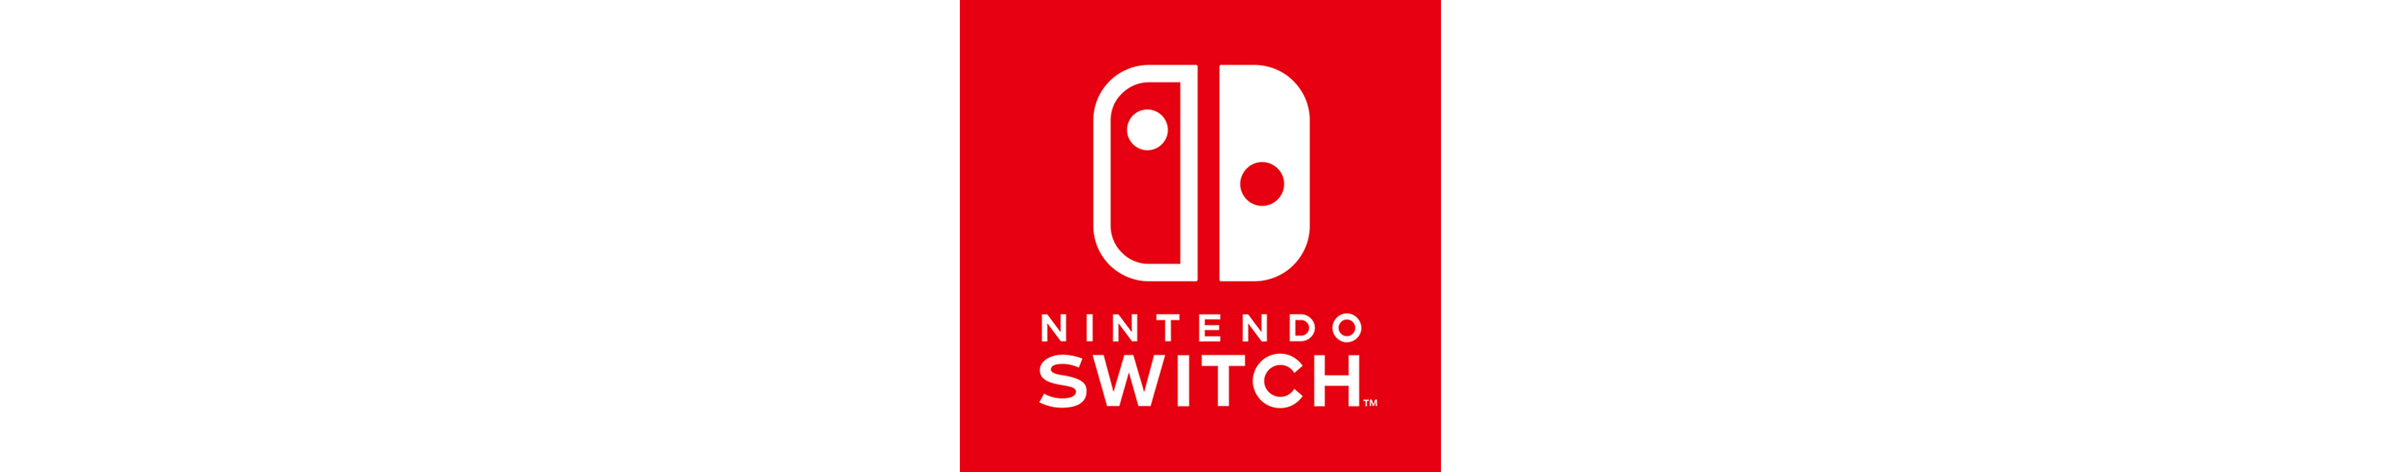 Nintendo New Releases